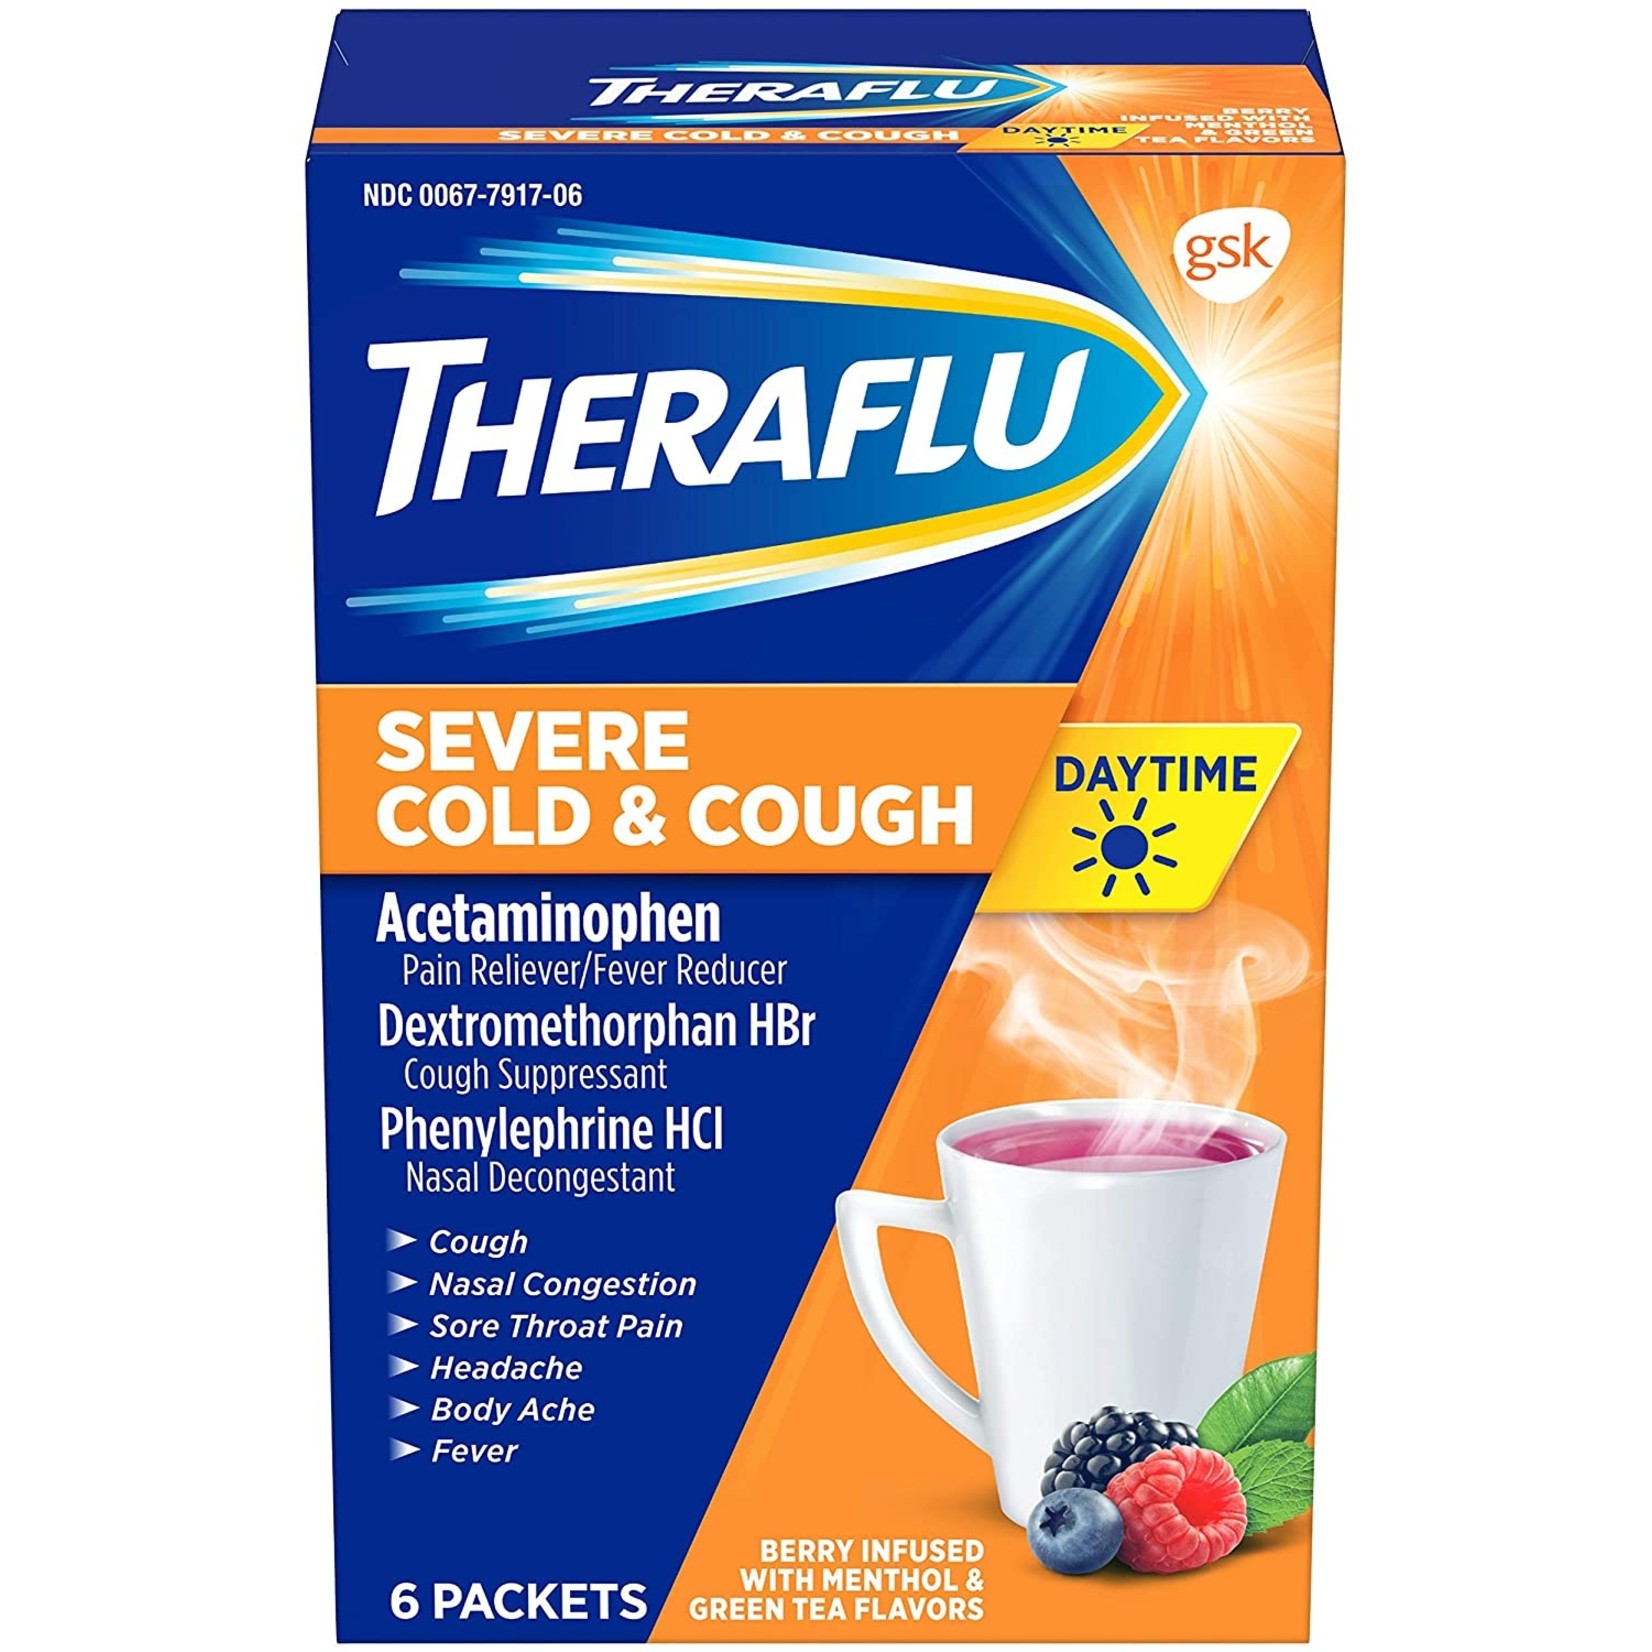 TheraFlu Severe Cough & Cold Daytime Powder